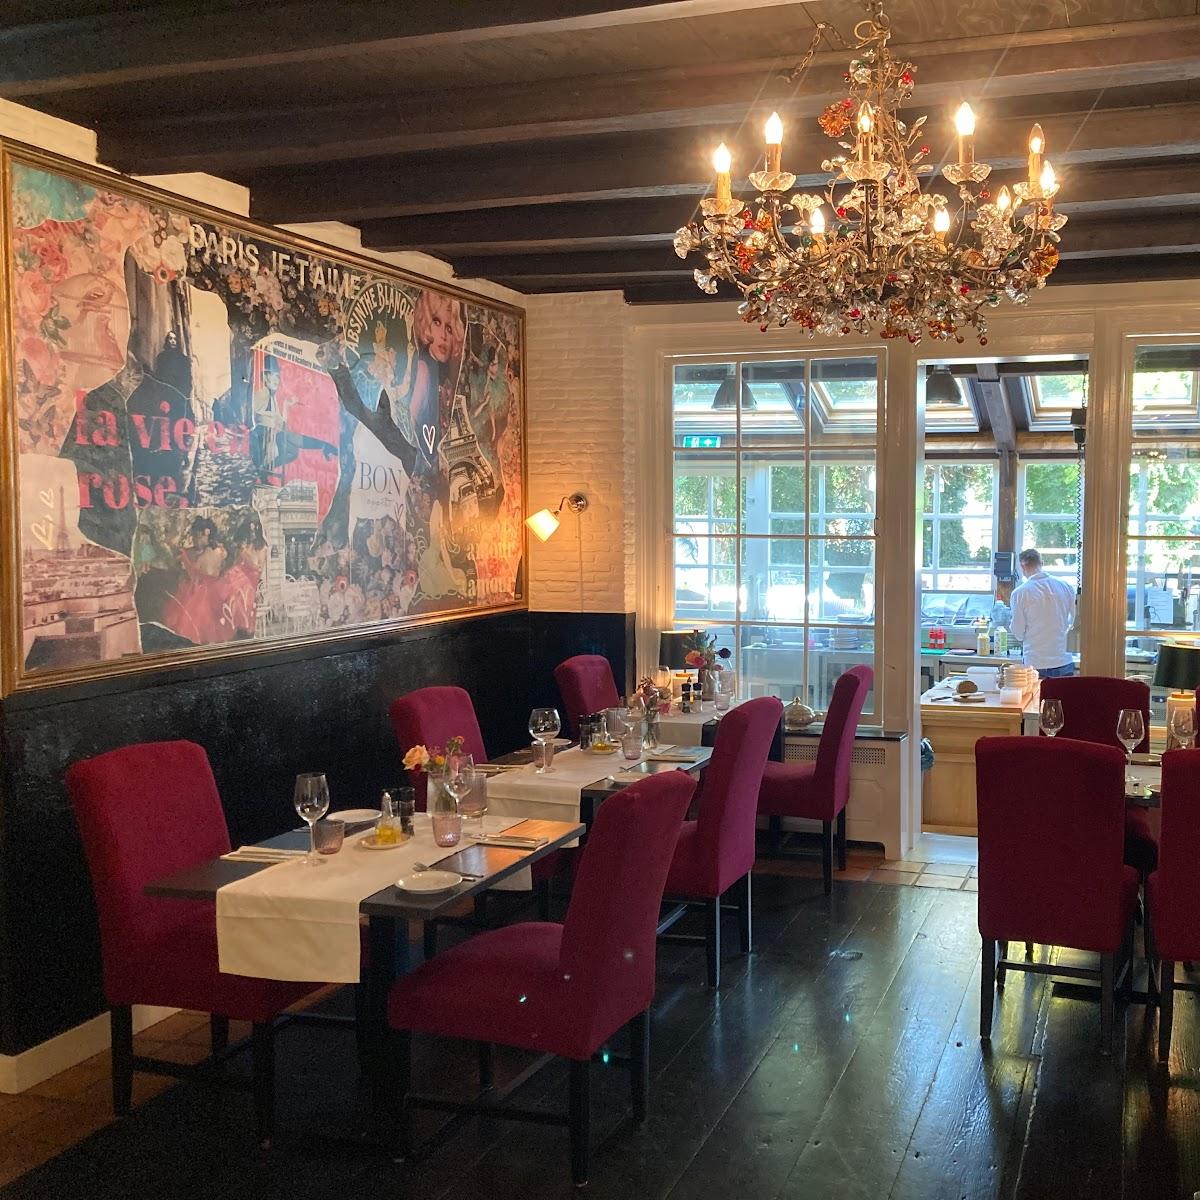 Restaurant "Bistro La Vie en Rose" in Groede